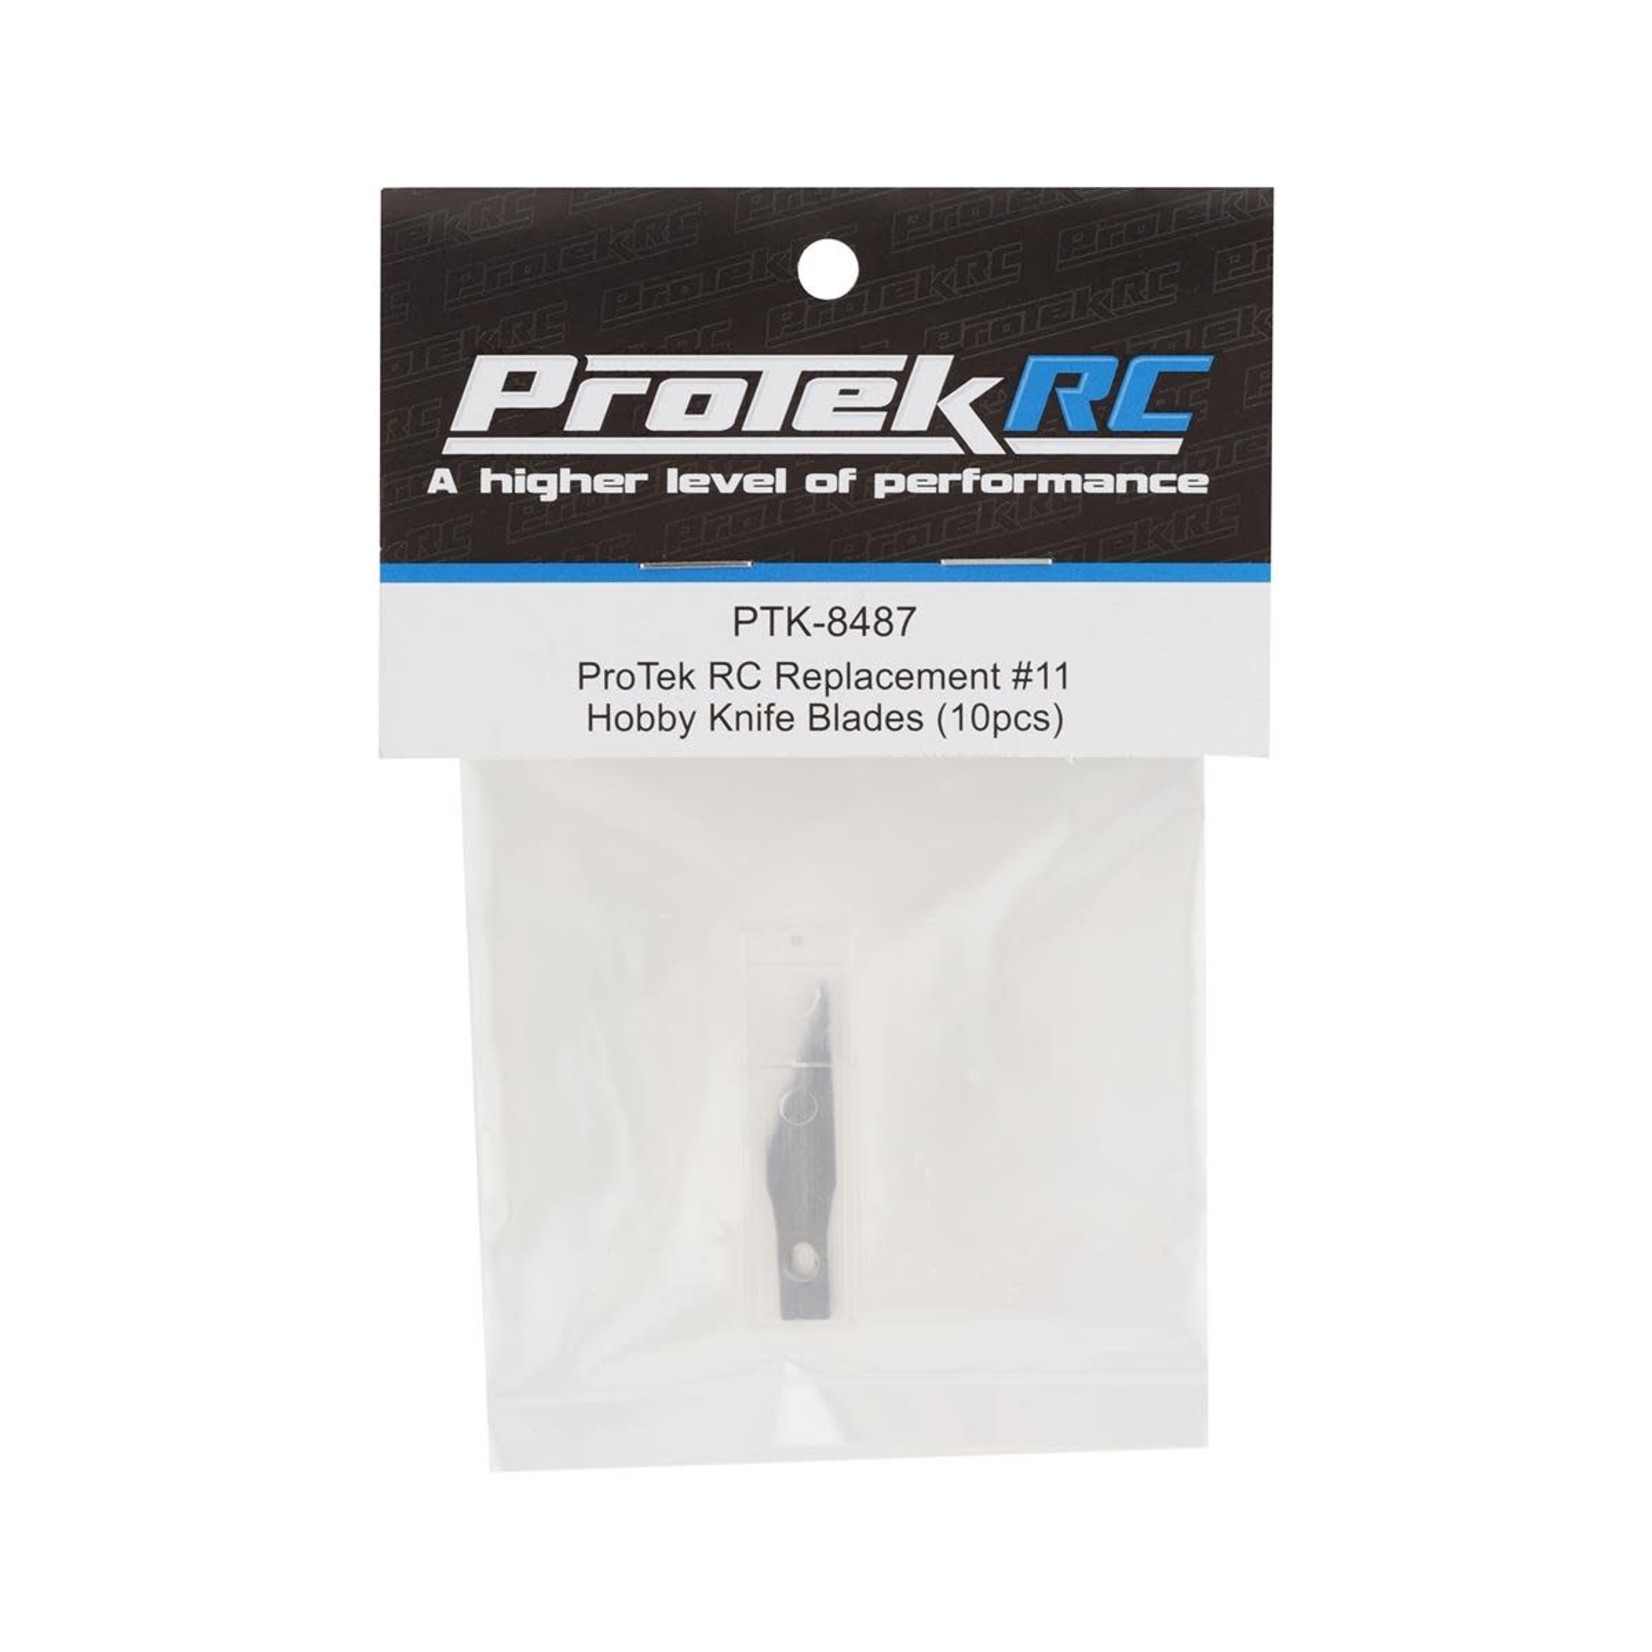 ProTek RC ProTek RC Replacement #11 Hobby Knife Blades (10pcs) #PTK-8487